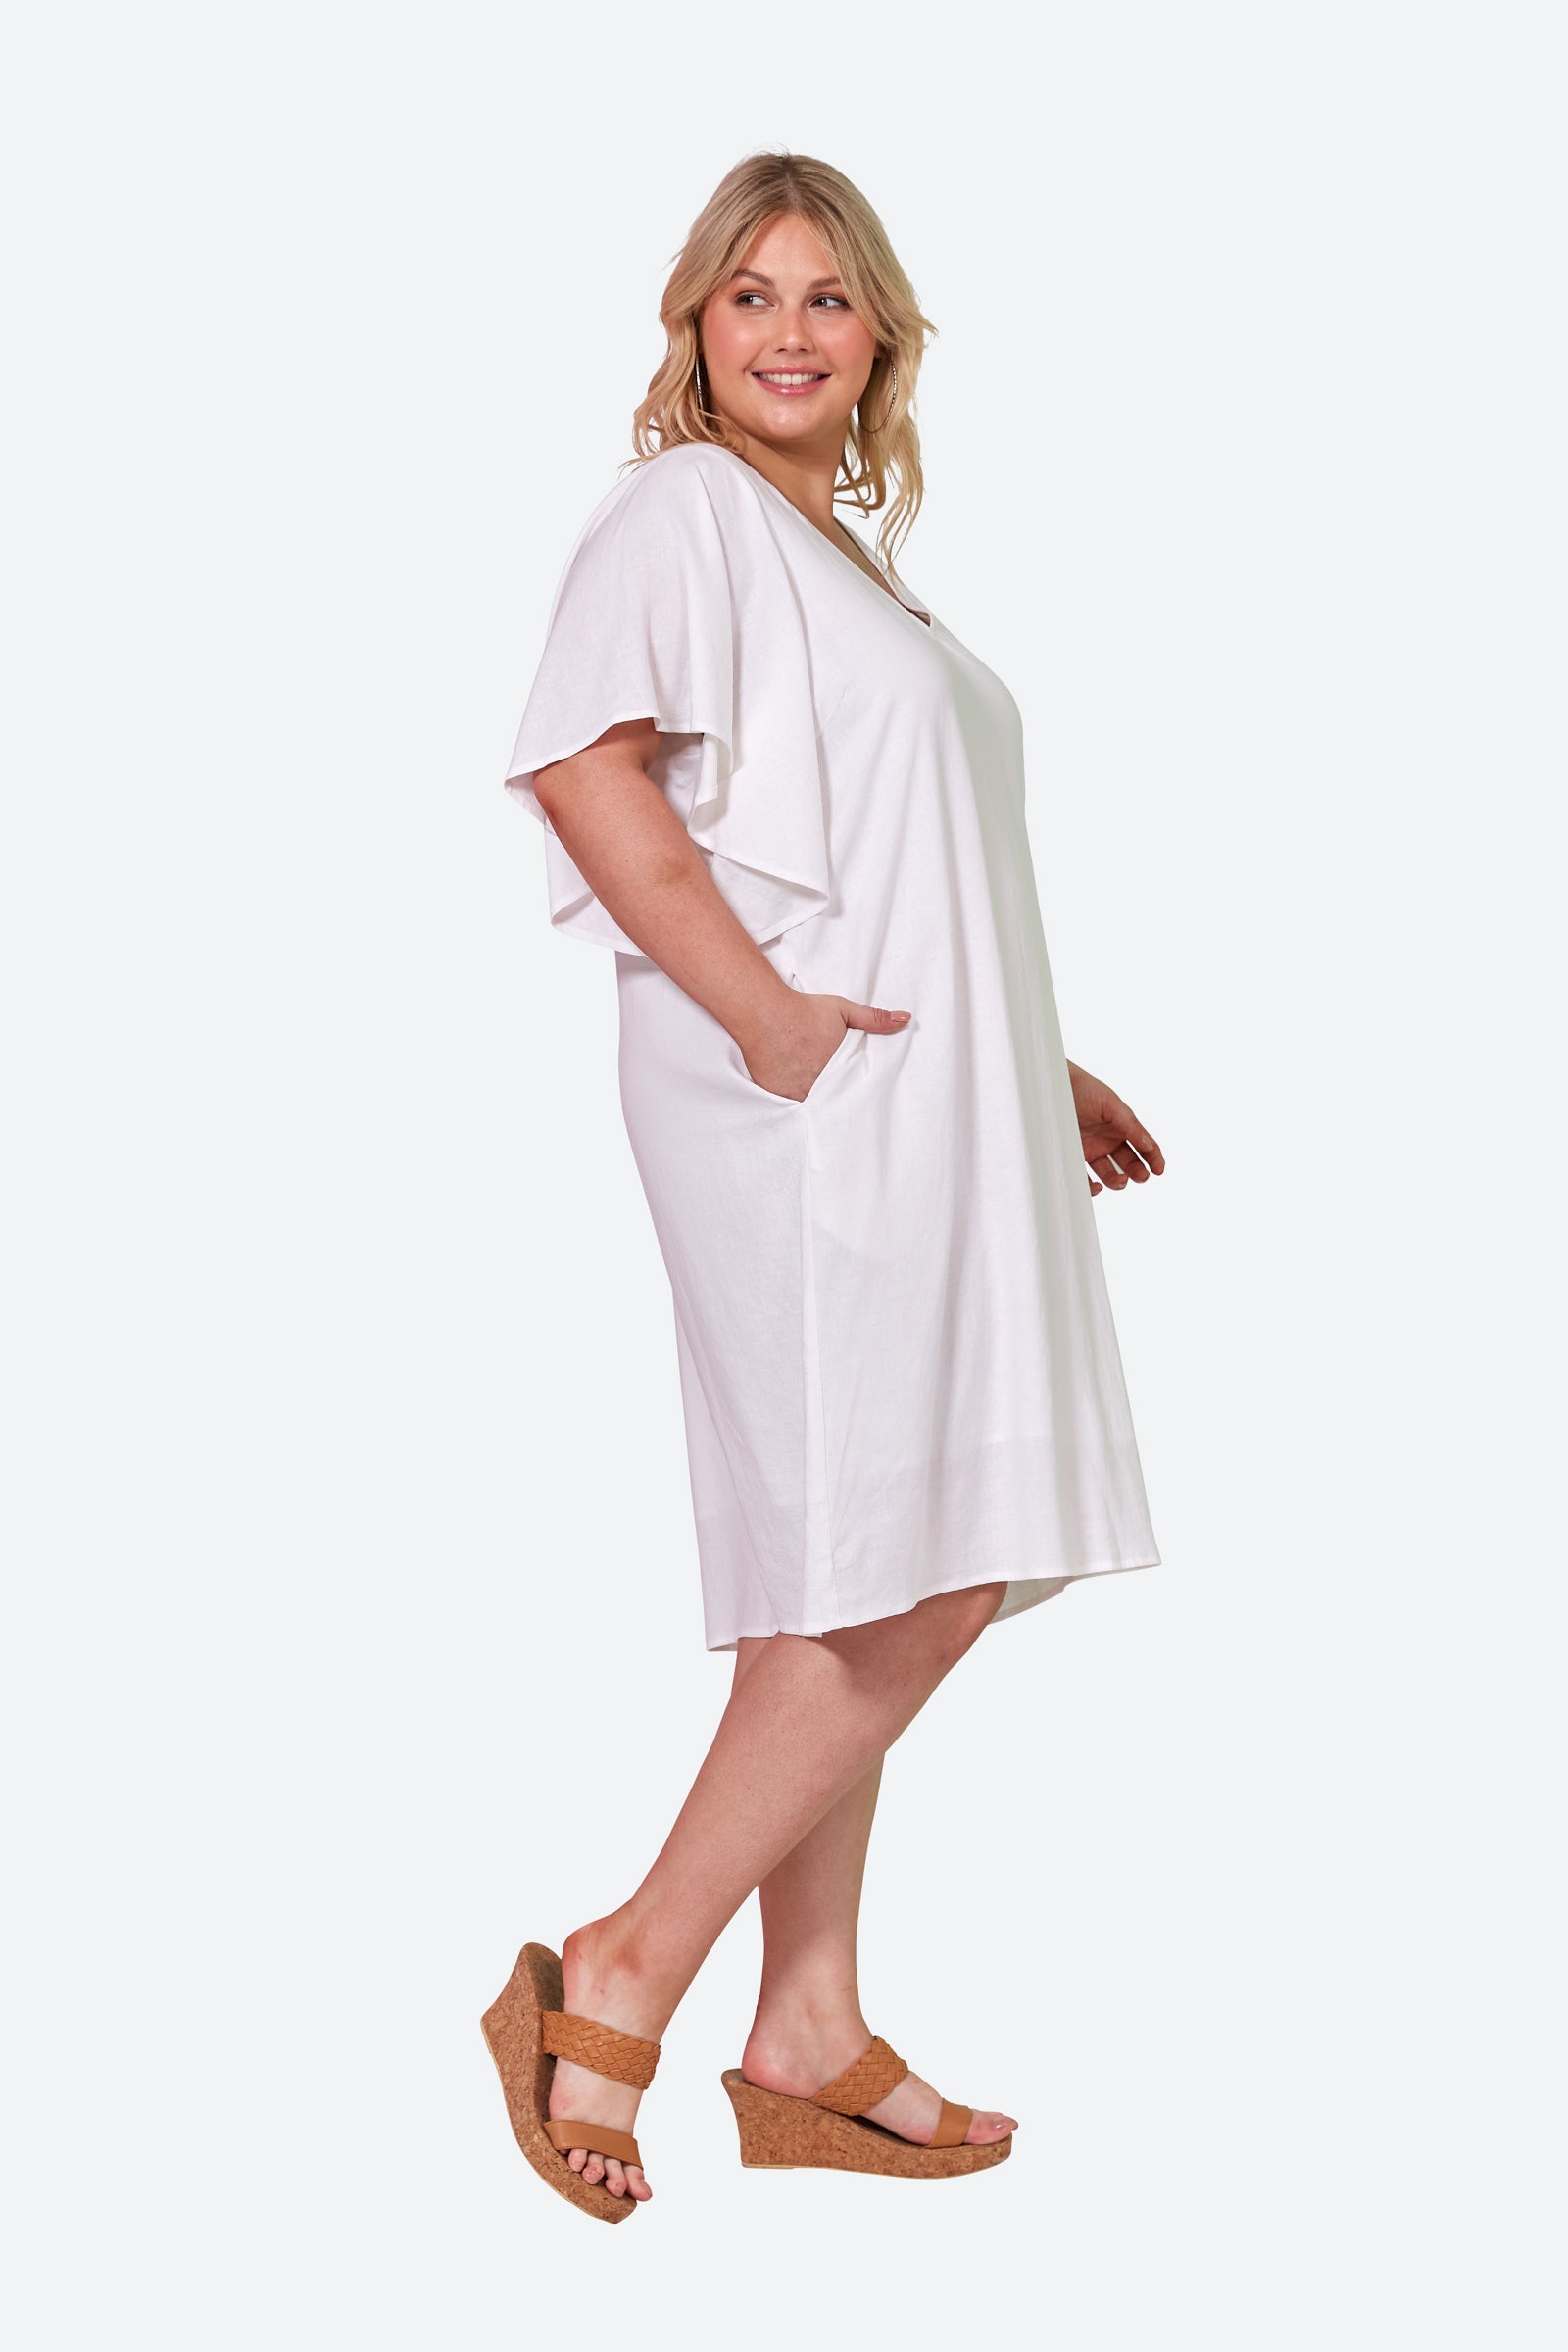 Verve Dress - Blanc - eb&ive Clothing - Dress Mid Linen